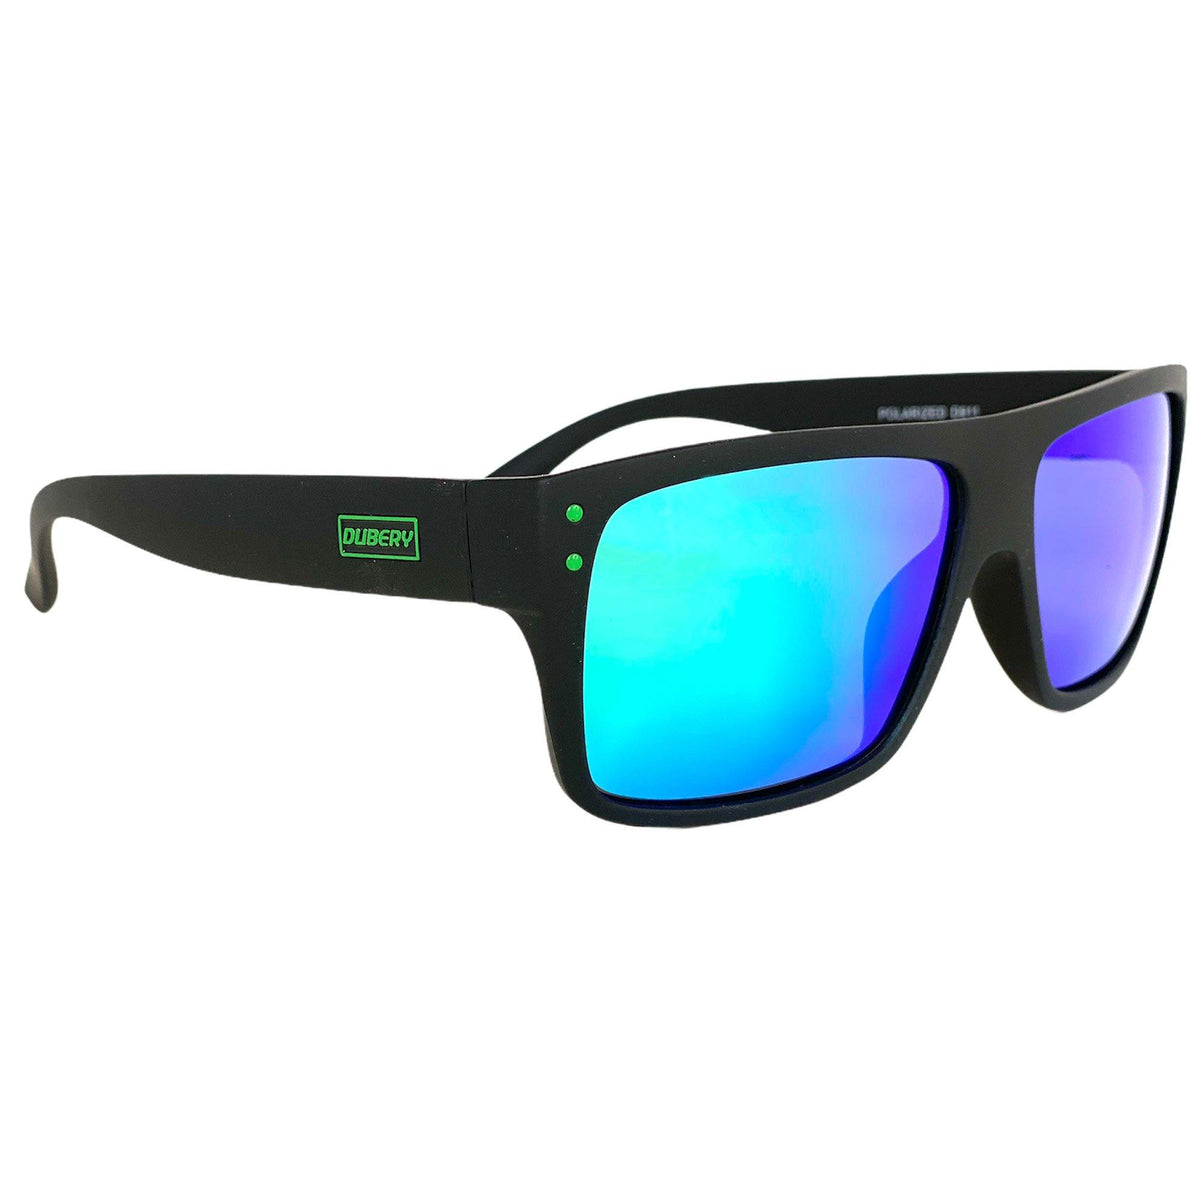 Dubery Sunglasses Reviews– Dubery Optics Sunglasses